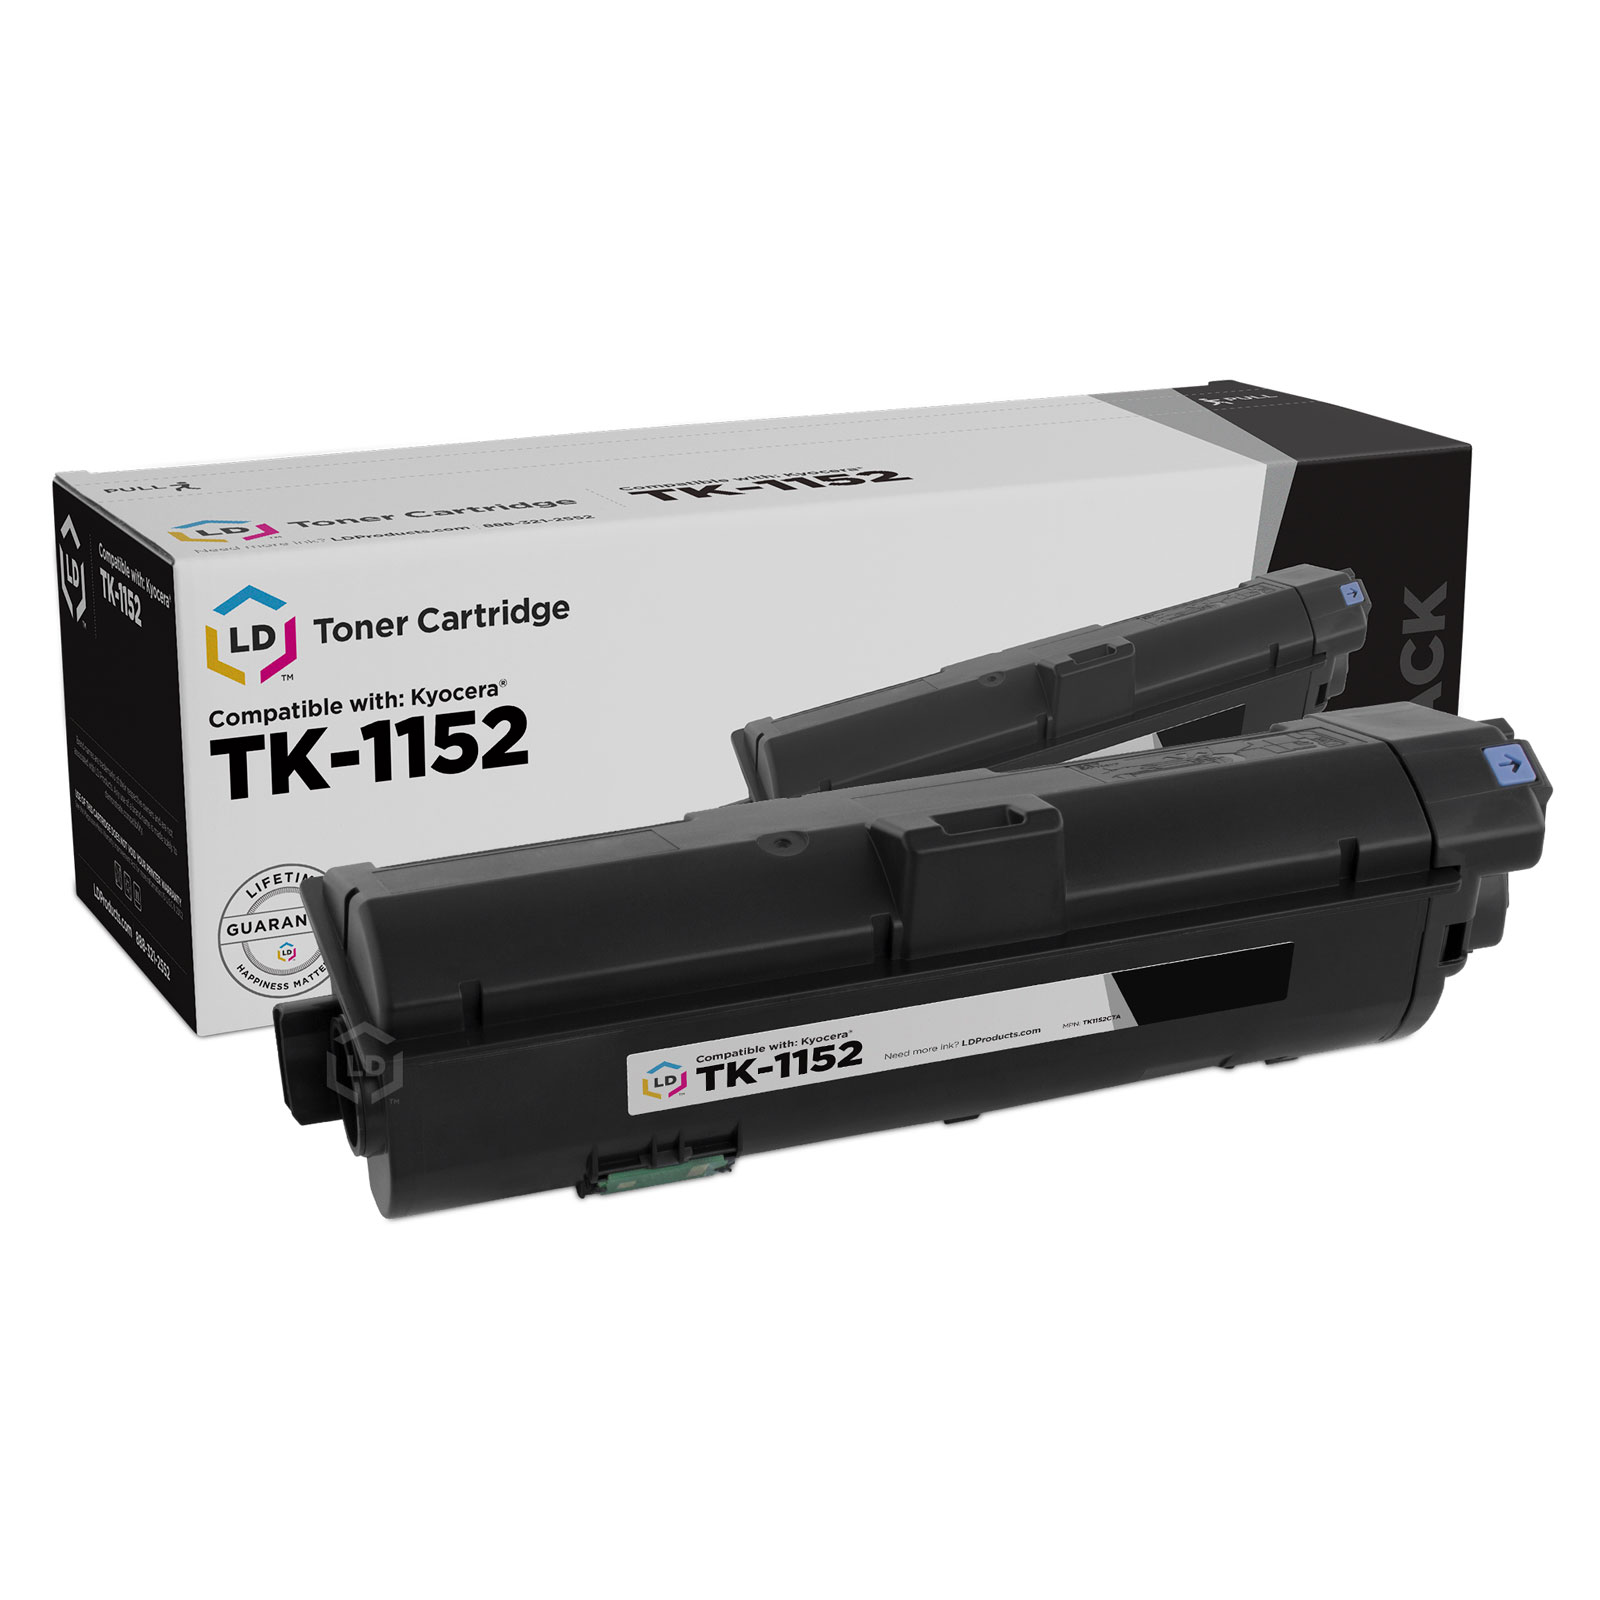 LD Compatible Kyocera TK-1152 (1T02RV0US0) Pack of 2 Black Laser Toner Cartridges for use in M2635dw - image 2 of 2